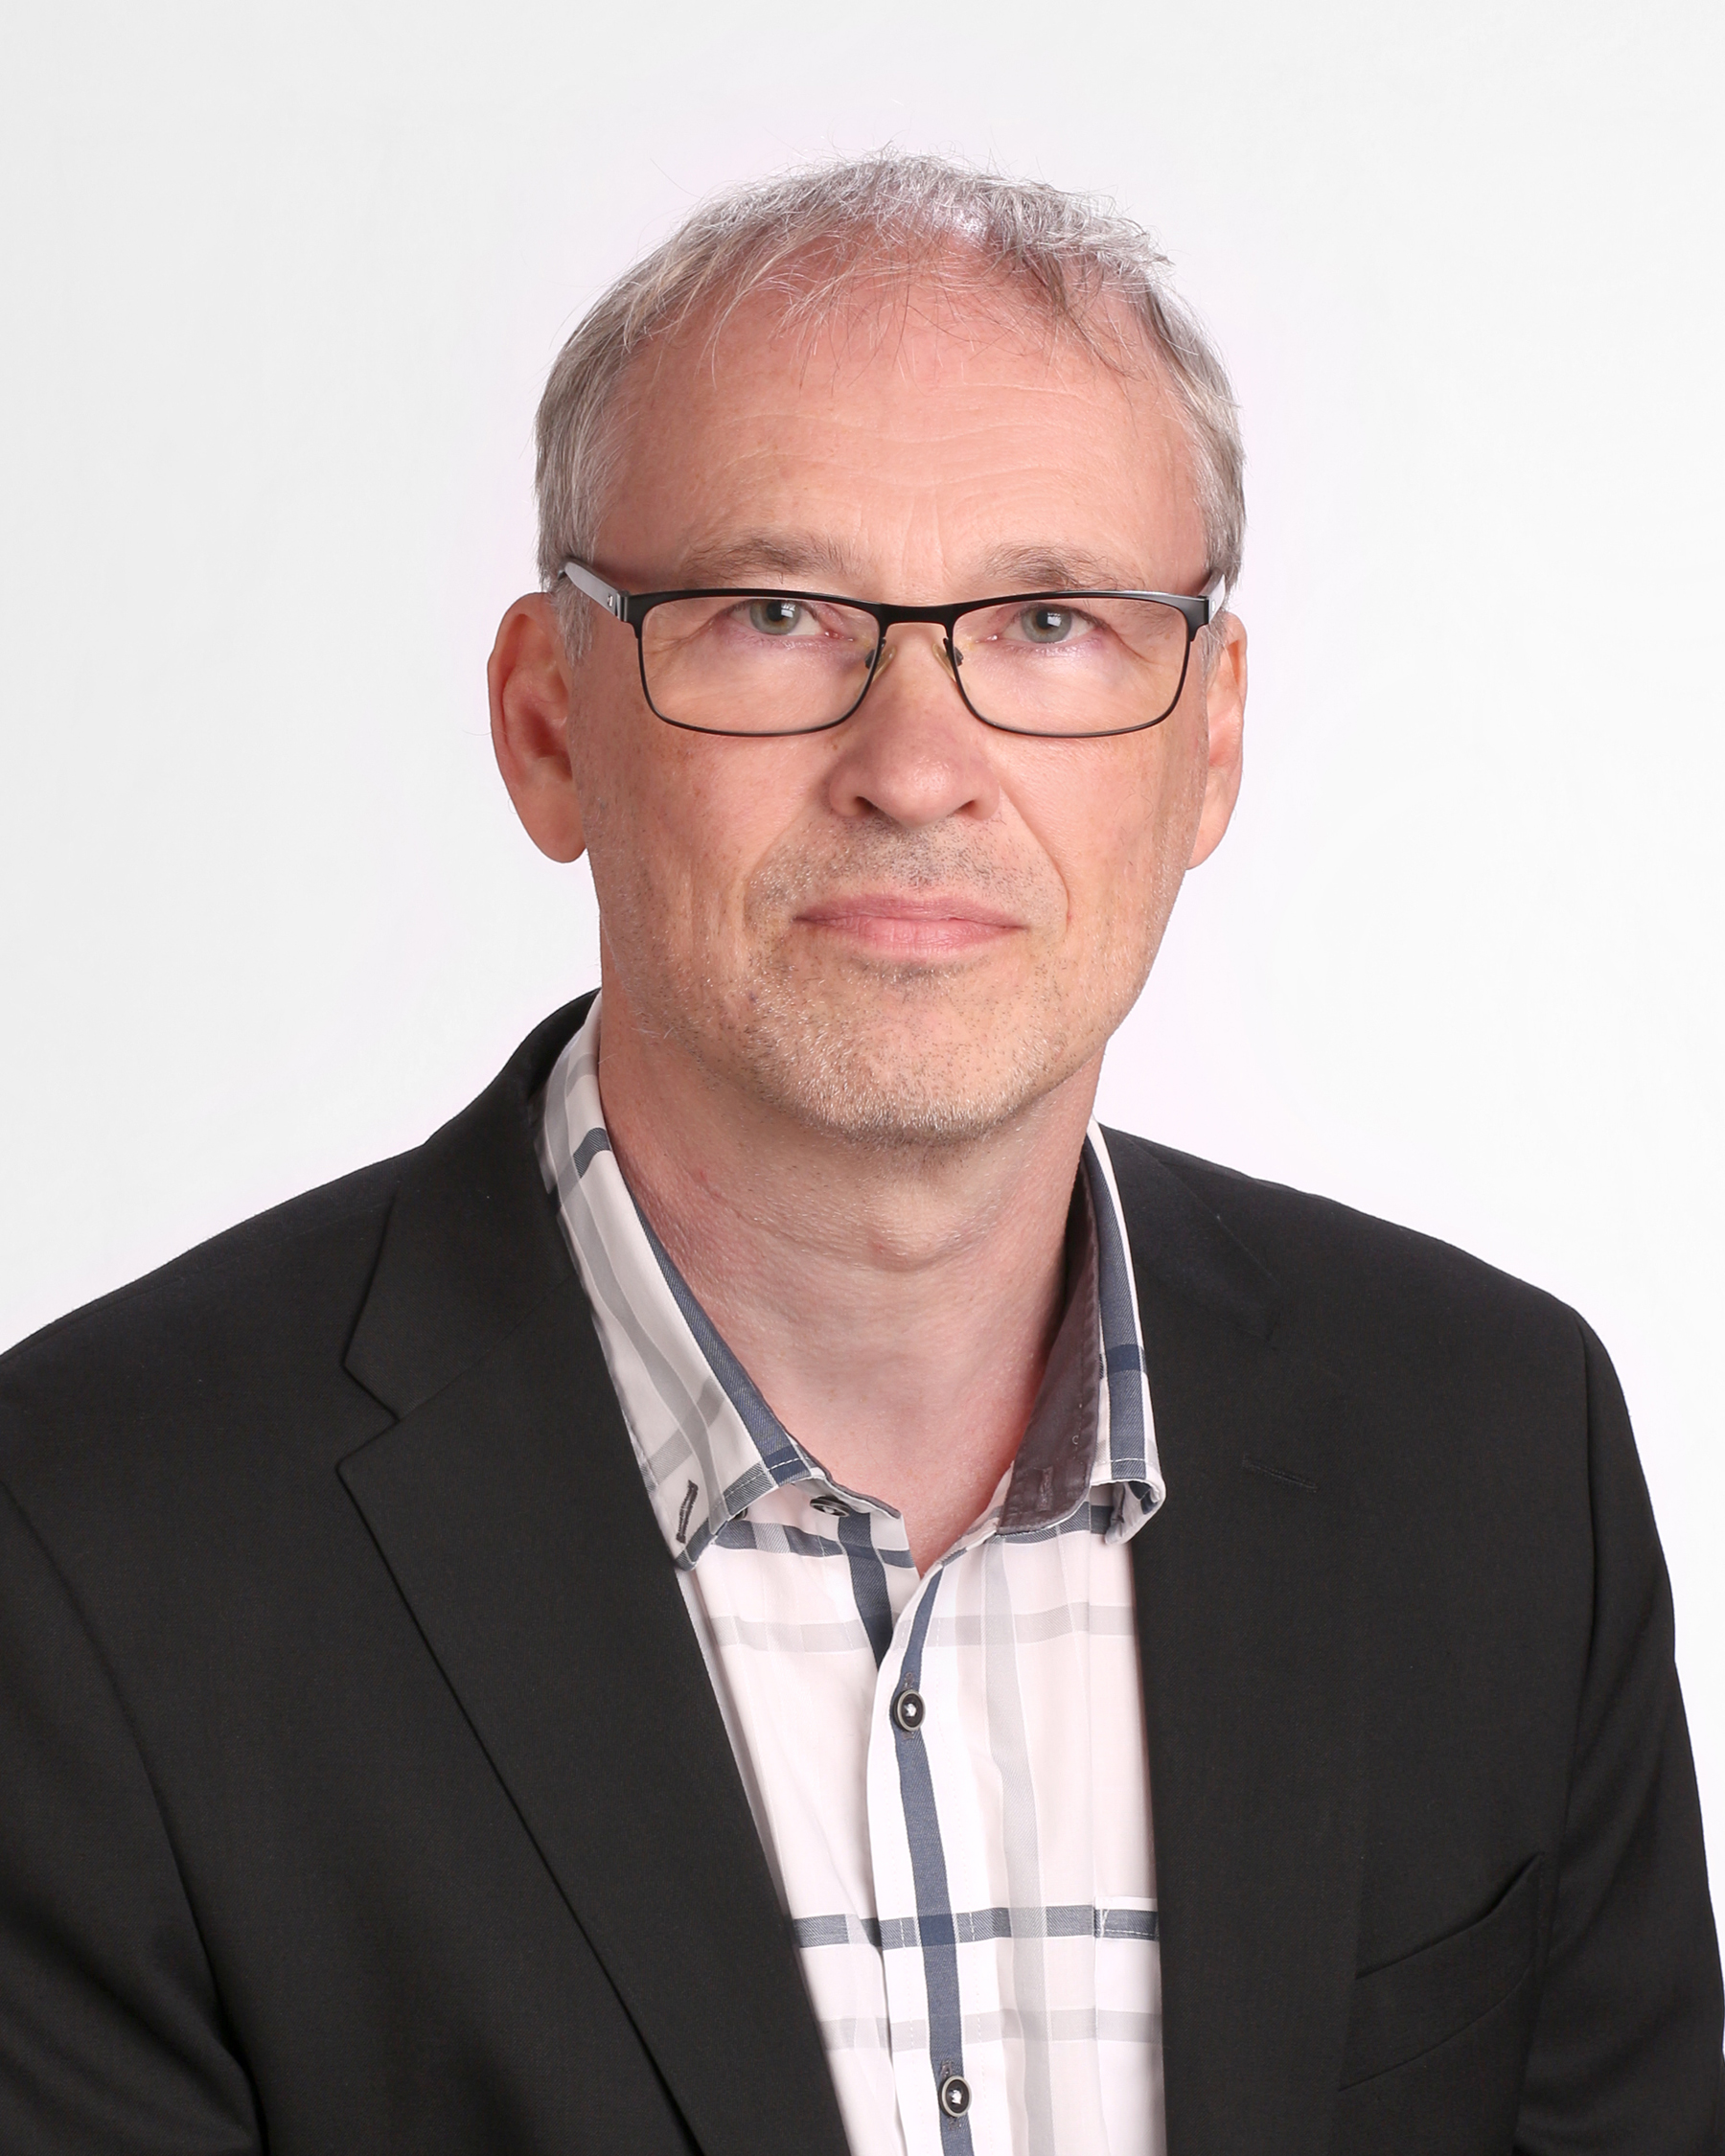 Jussi Halleen, Ph.D.